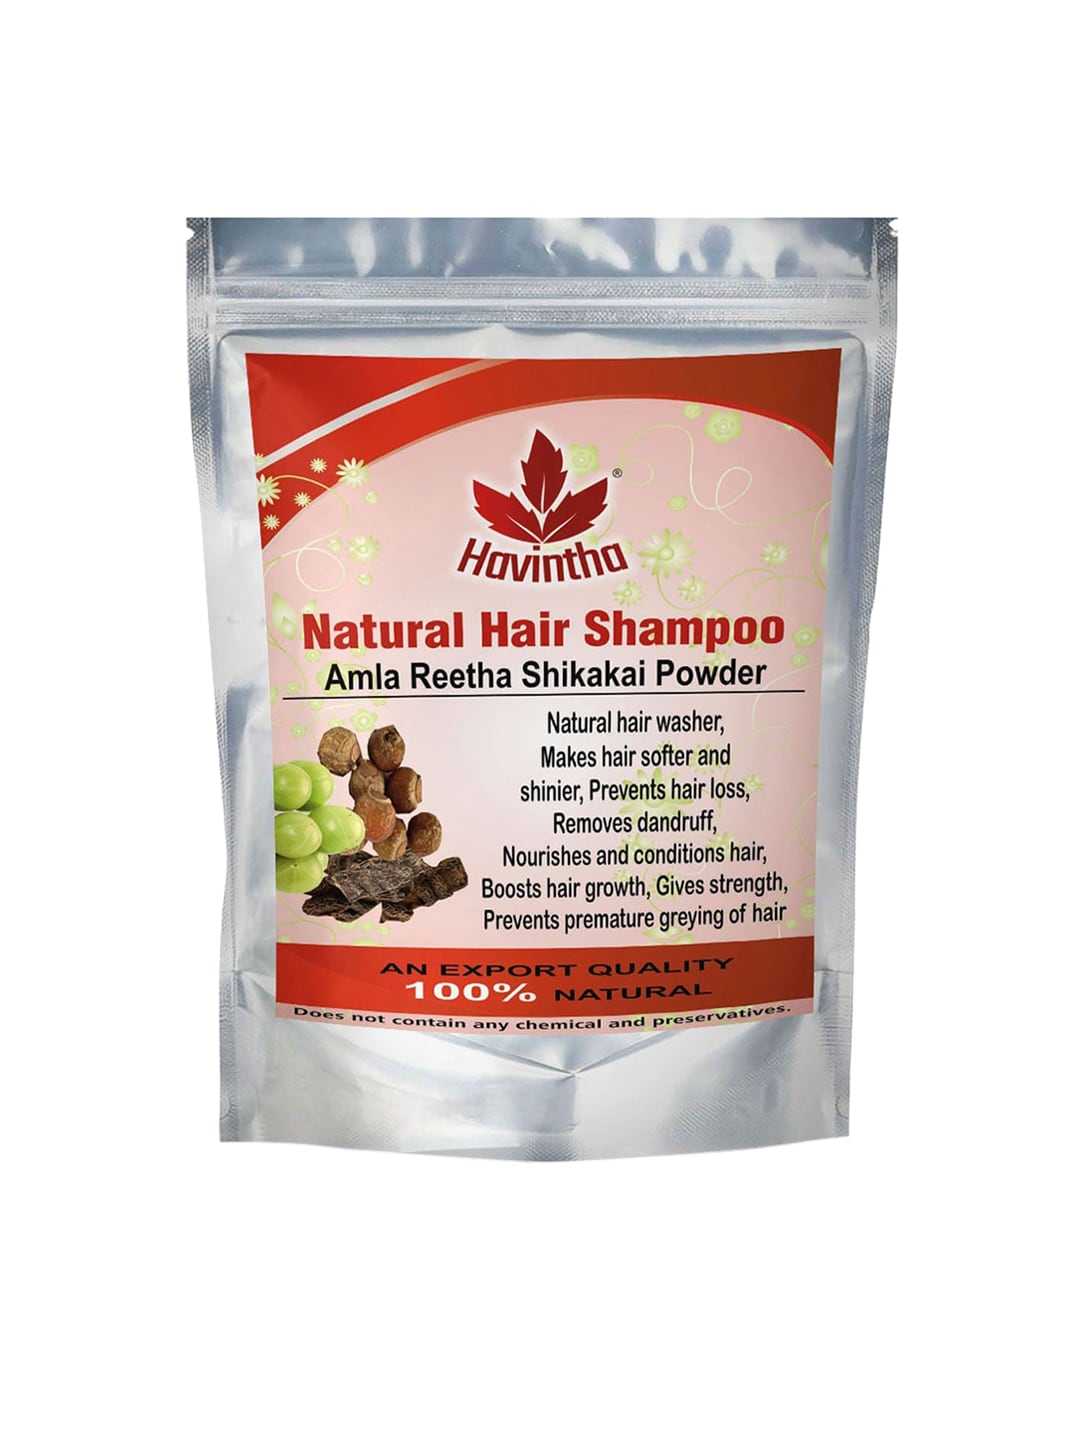 Havintha Green Natural Hair Shampoo with Amla, Reetha and Shikakai Powder Price in India